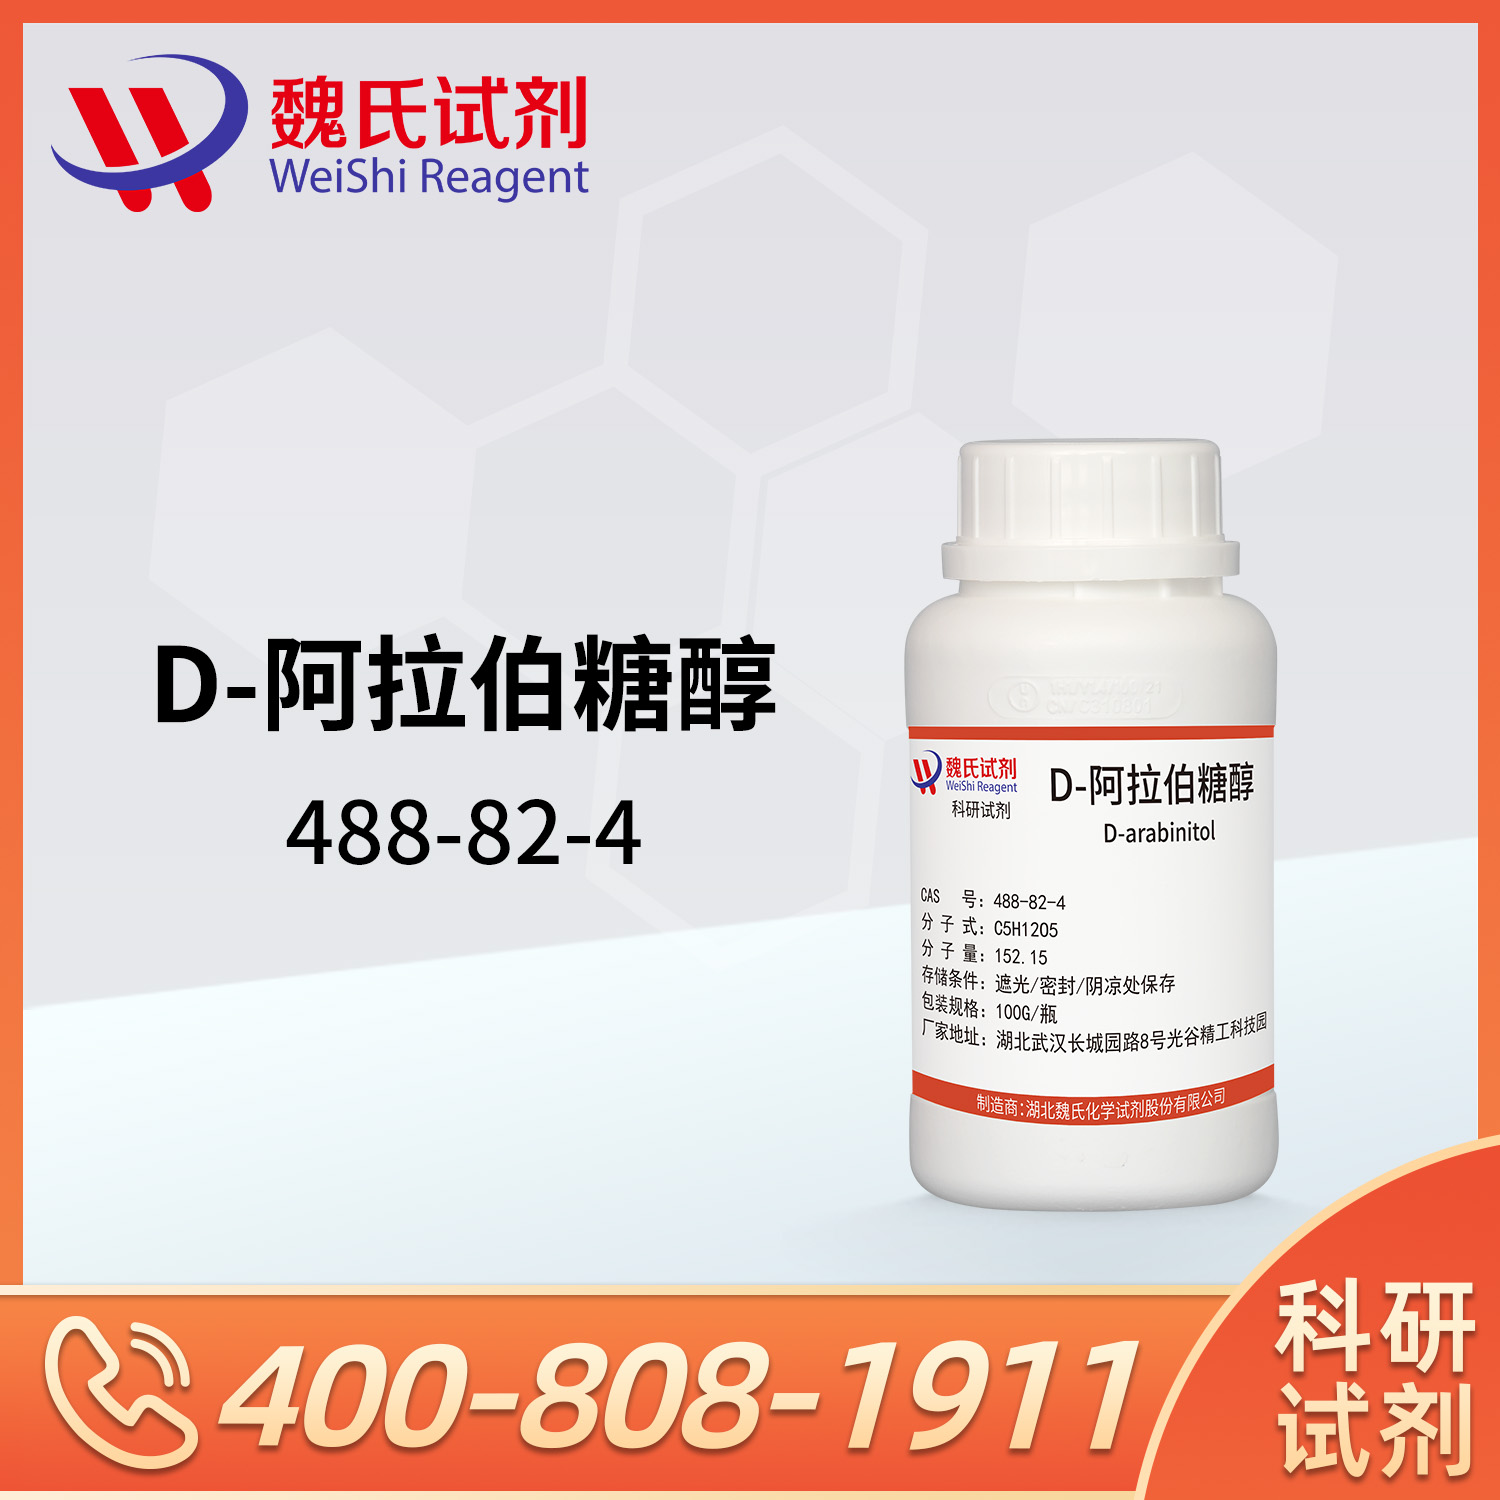 DL-Arabinitol